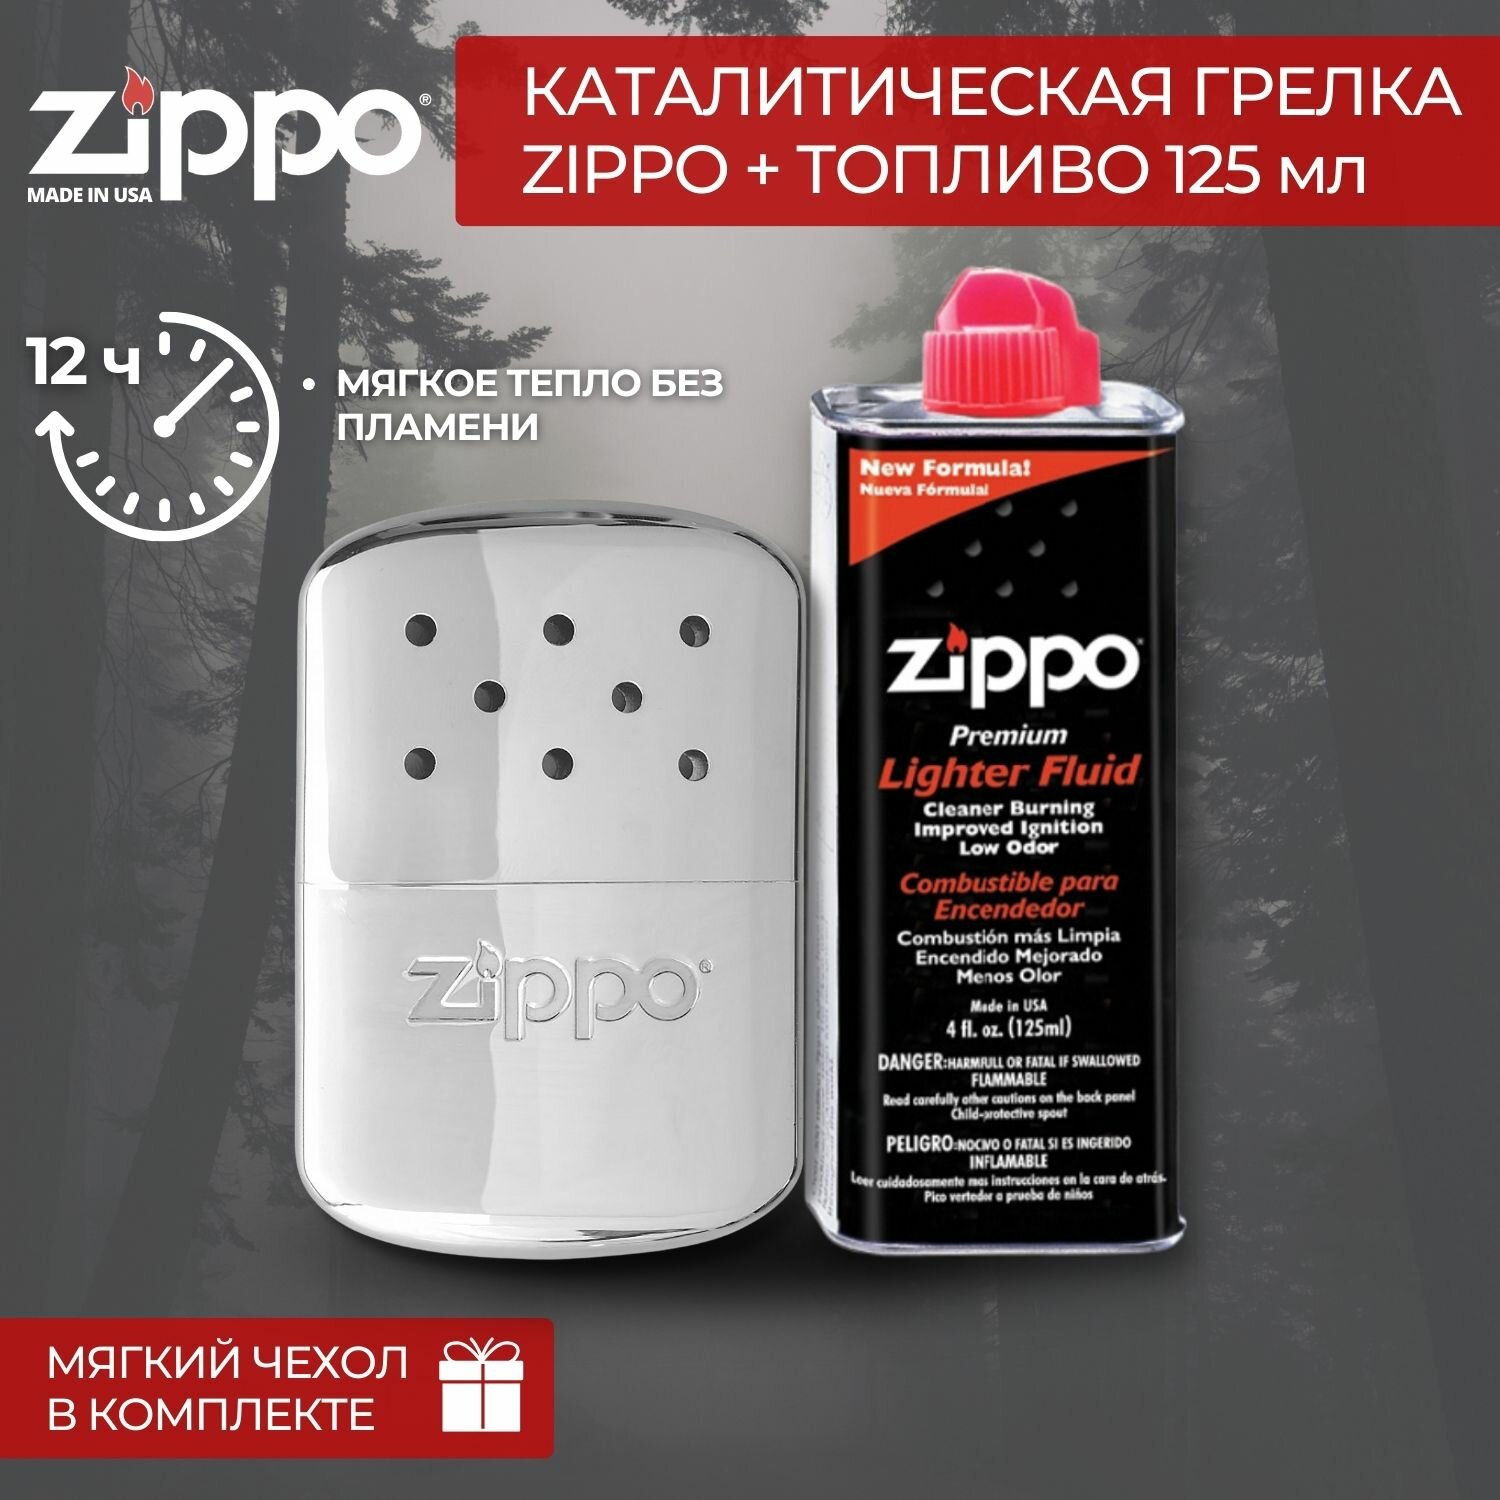 Набор Каталитическая грелка ZIPPO Pink на 6 ч + топливо 125 мл